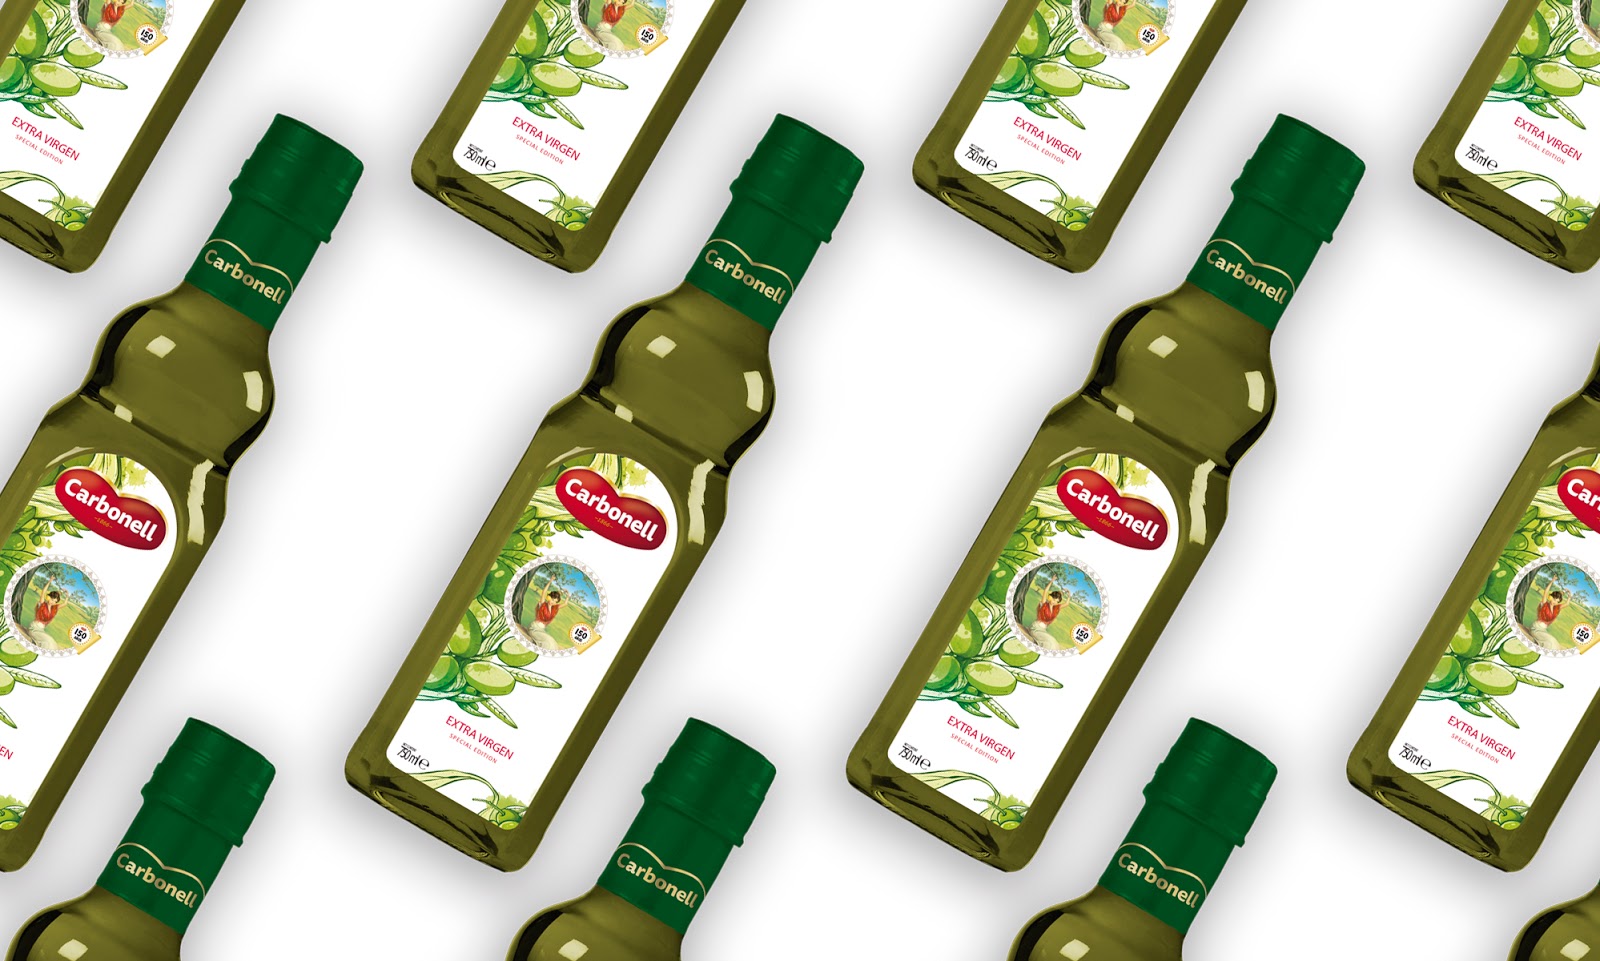 Carbonell橄榄油包装设计